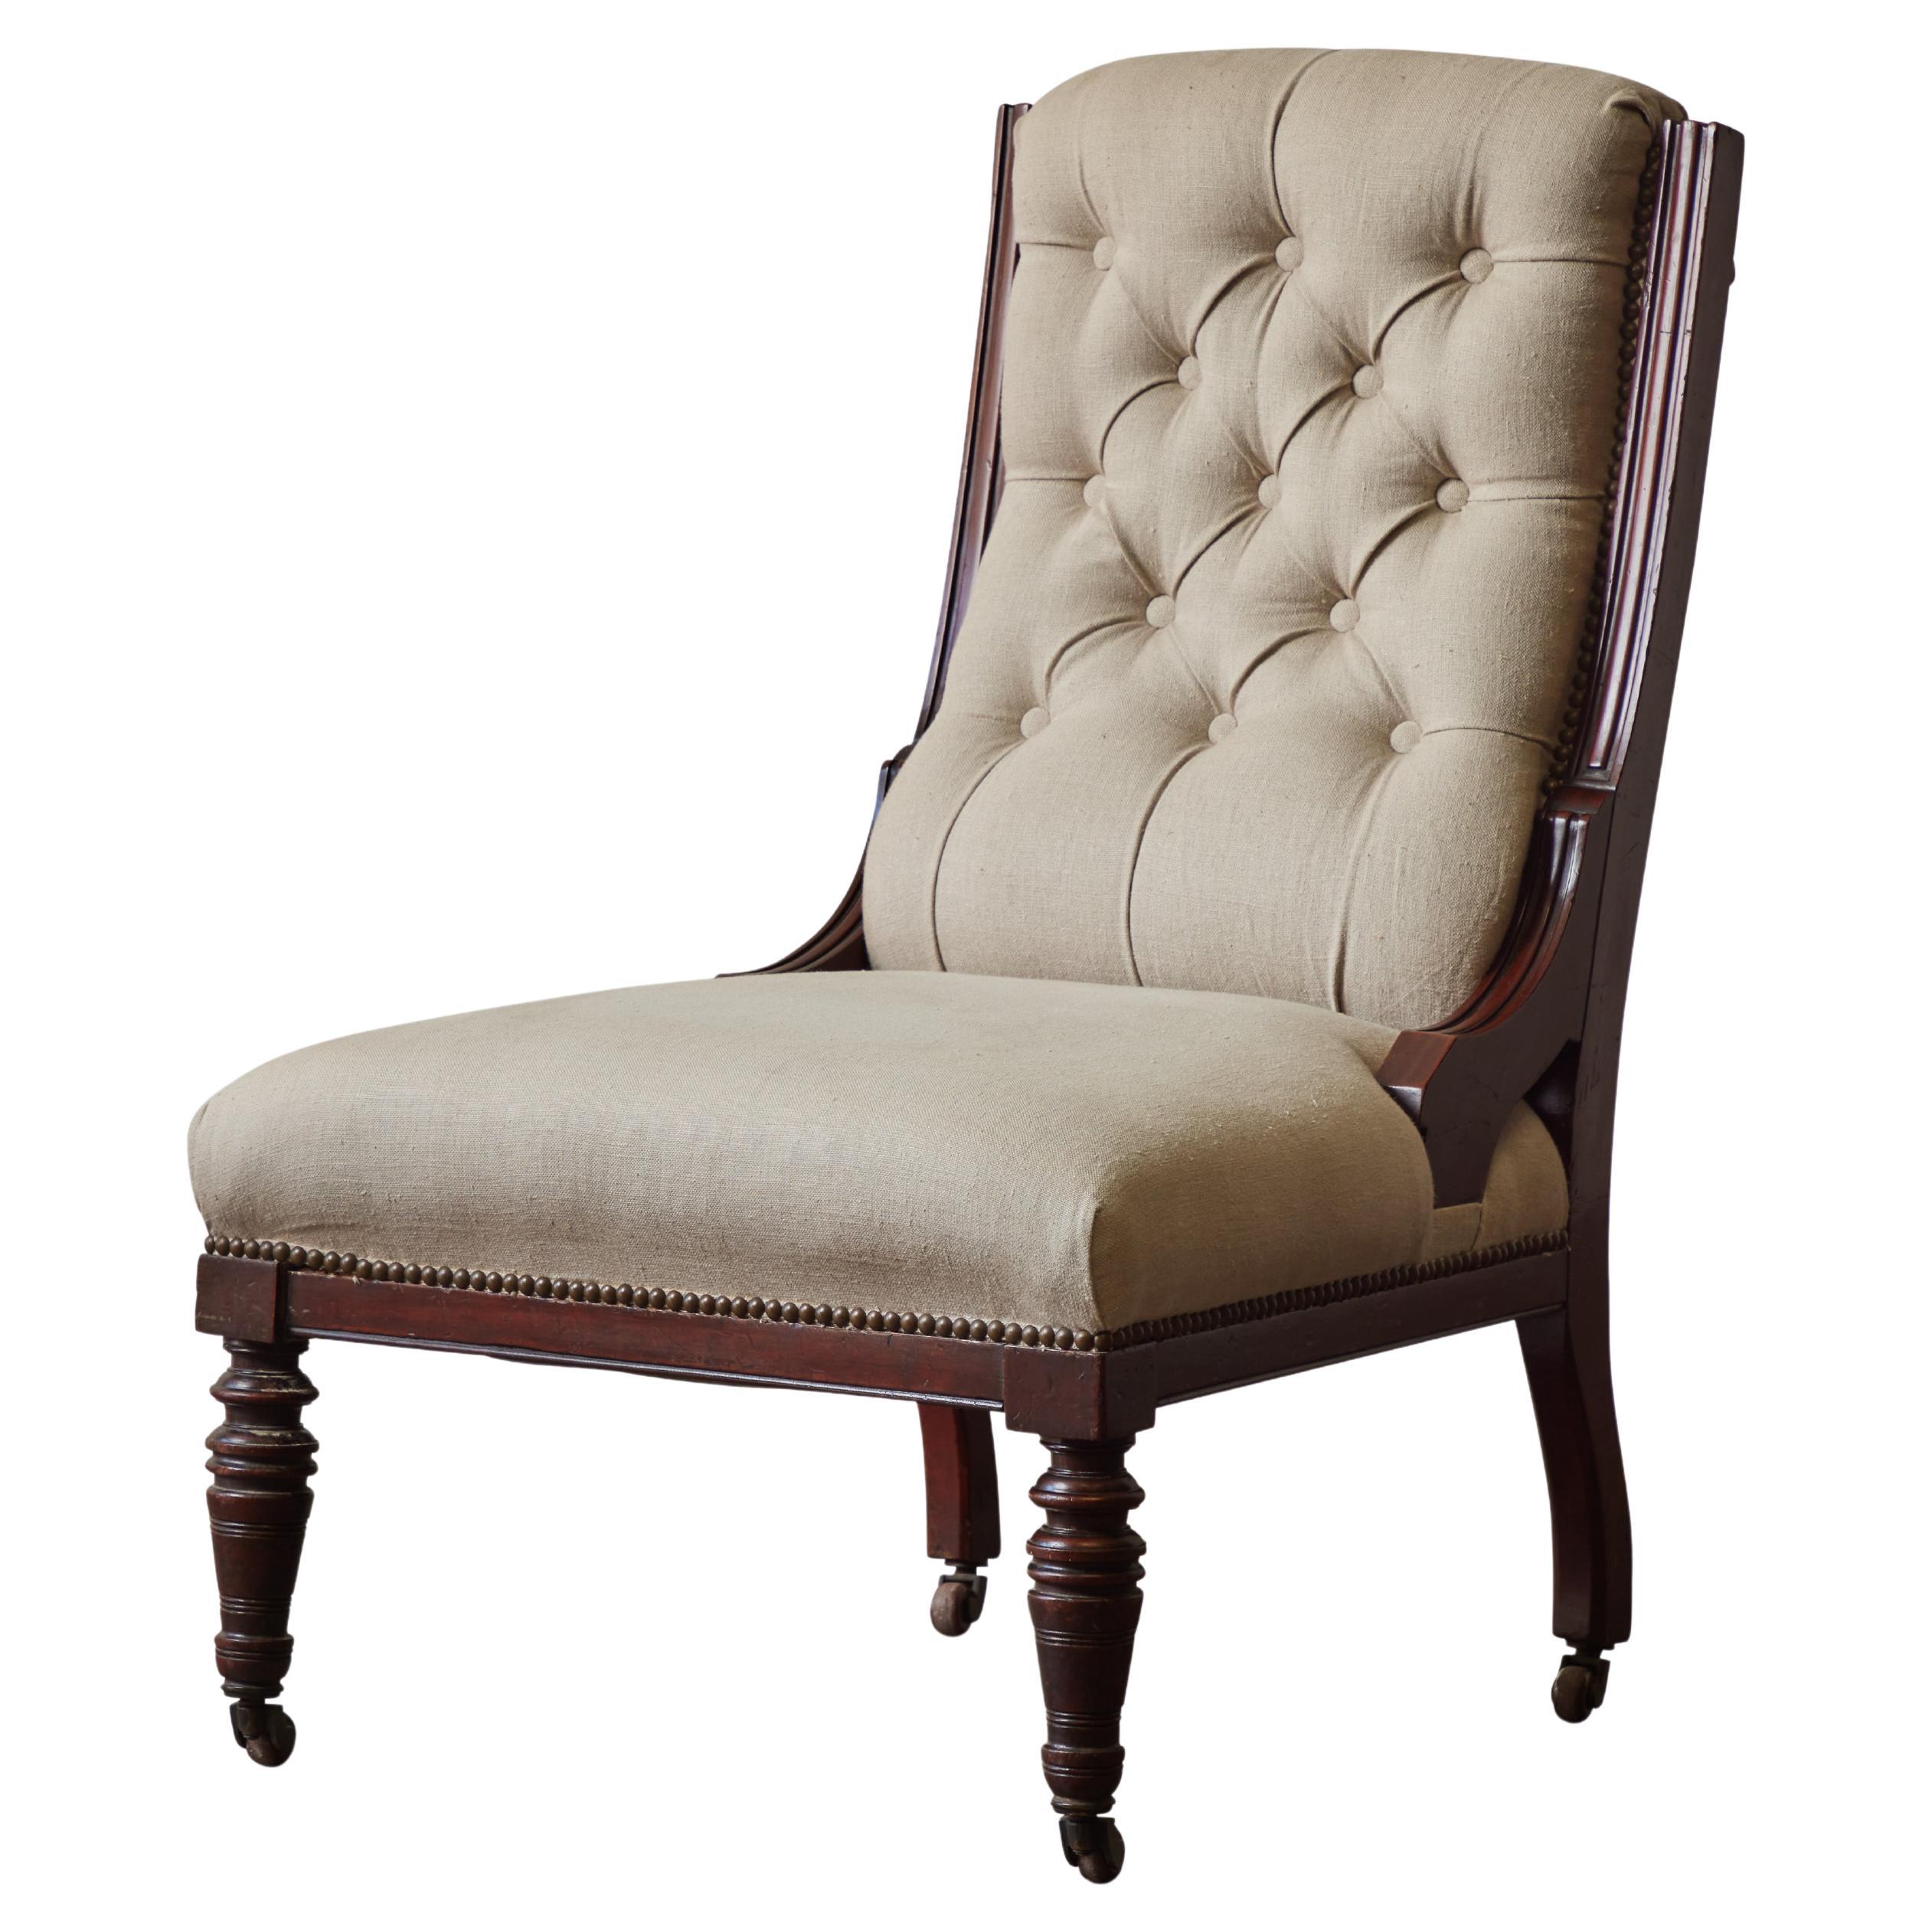 19th Century English Slipper Chair